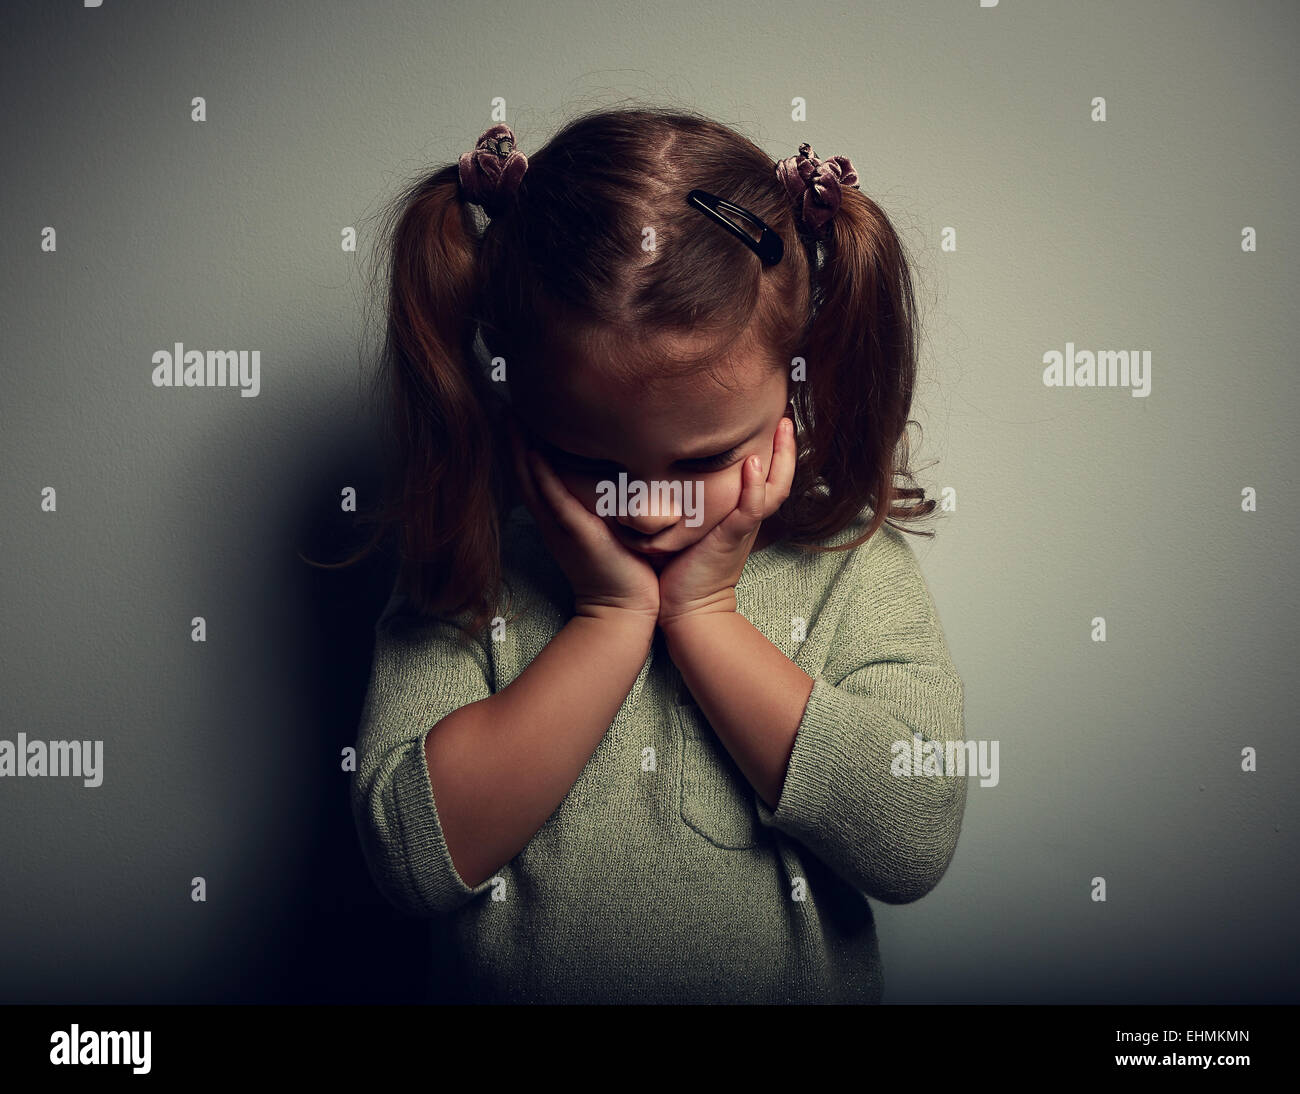 Sad crying alone kid girl on dark background. Closeup portrait Stock Photo